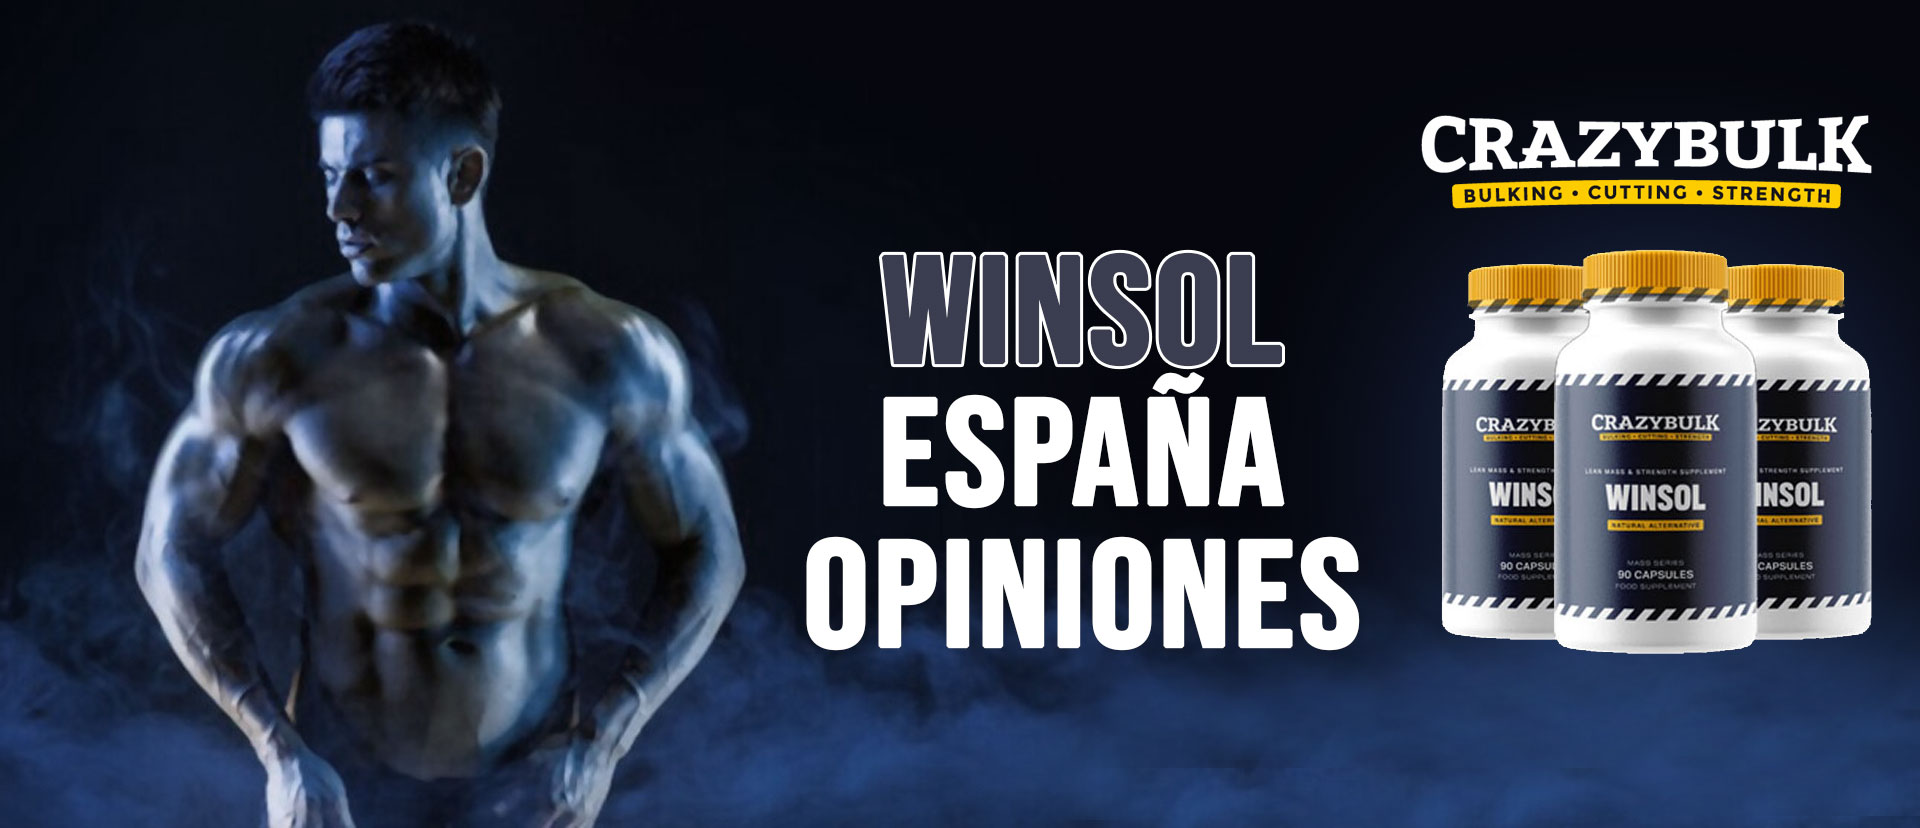 Winsol Espana